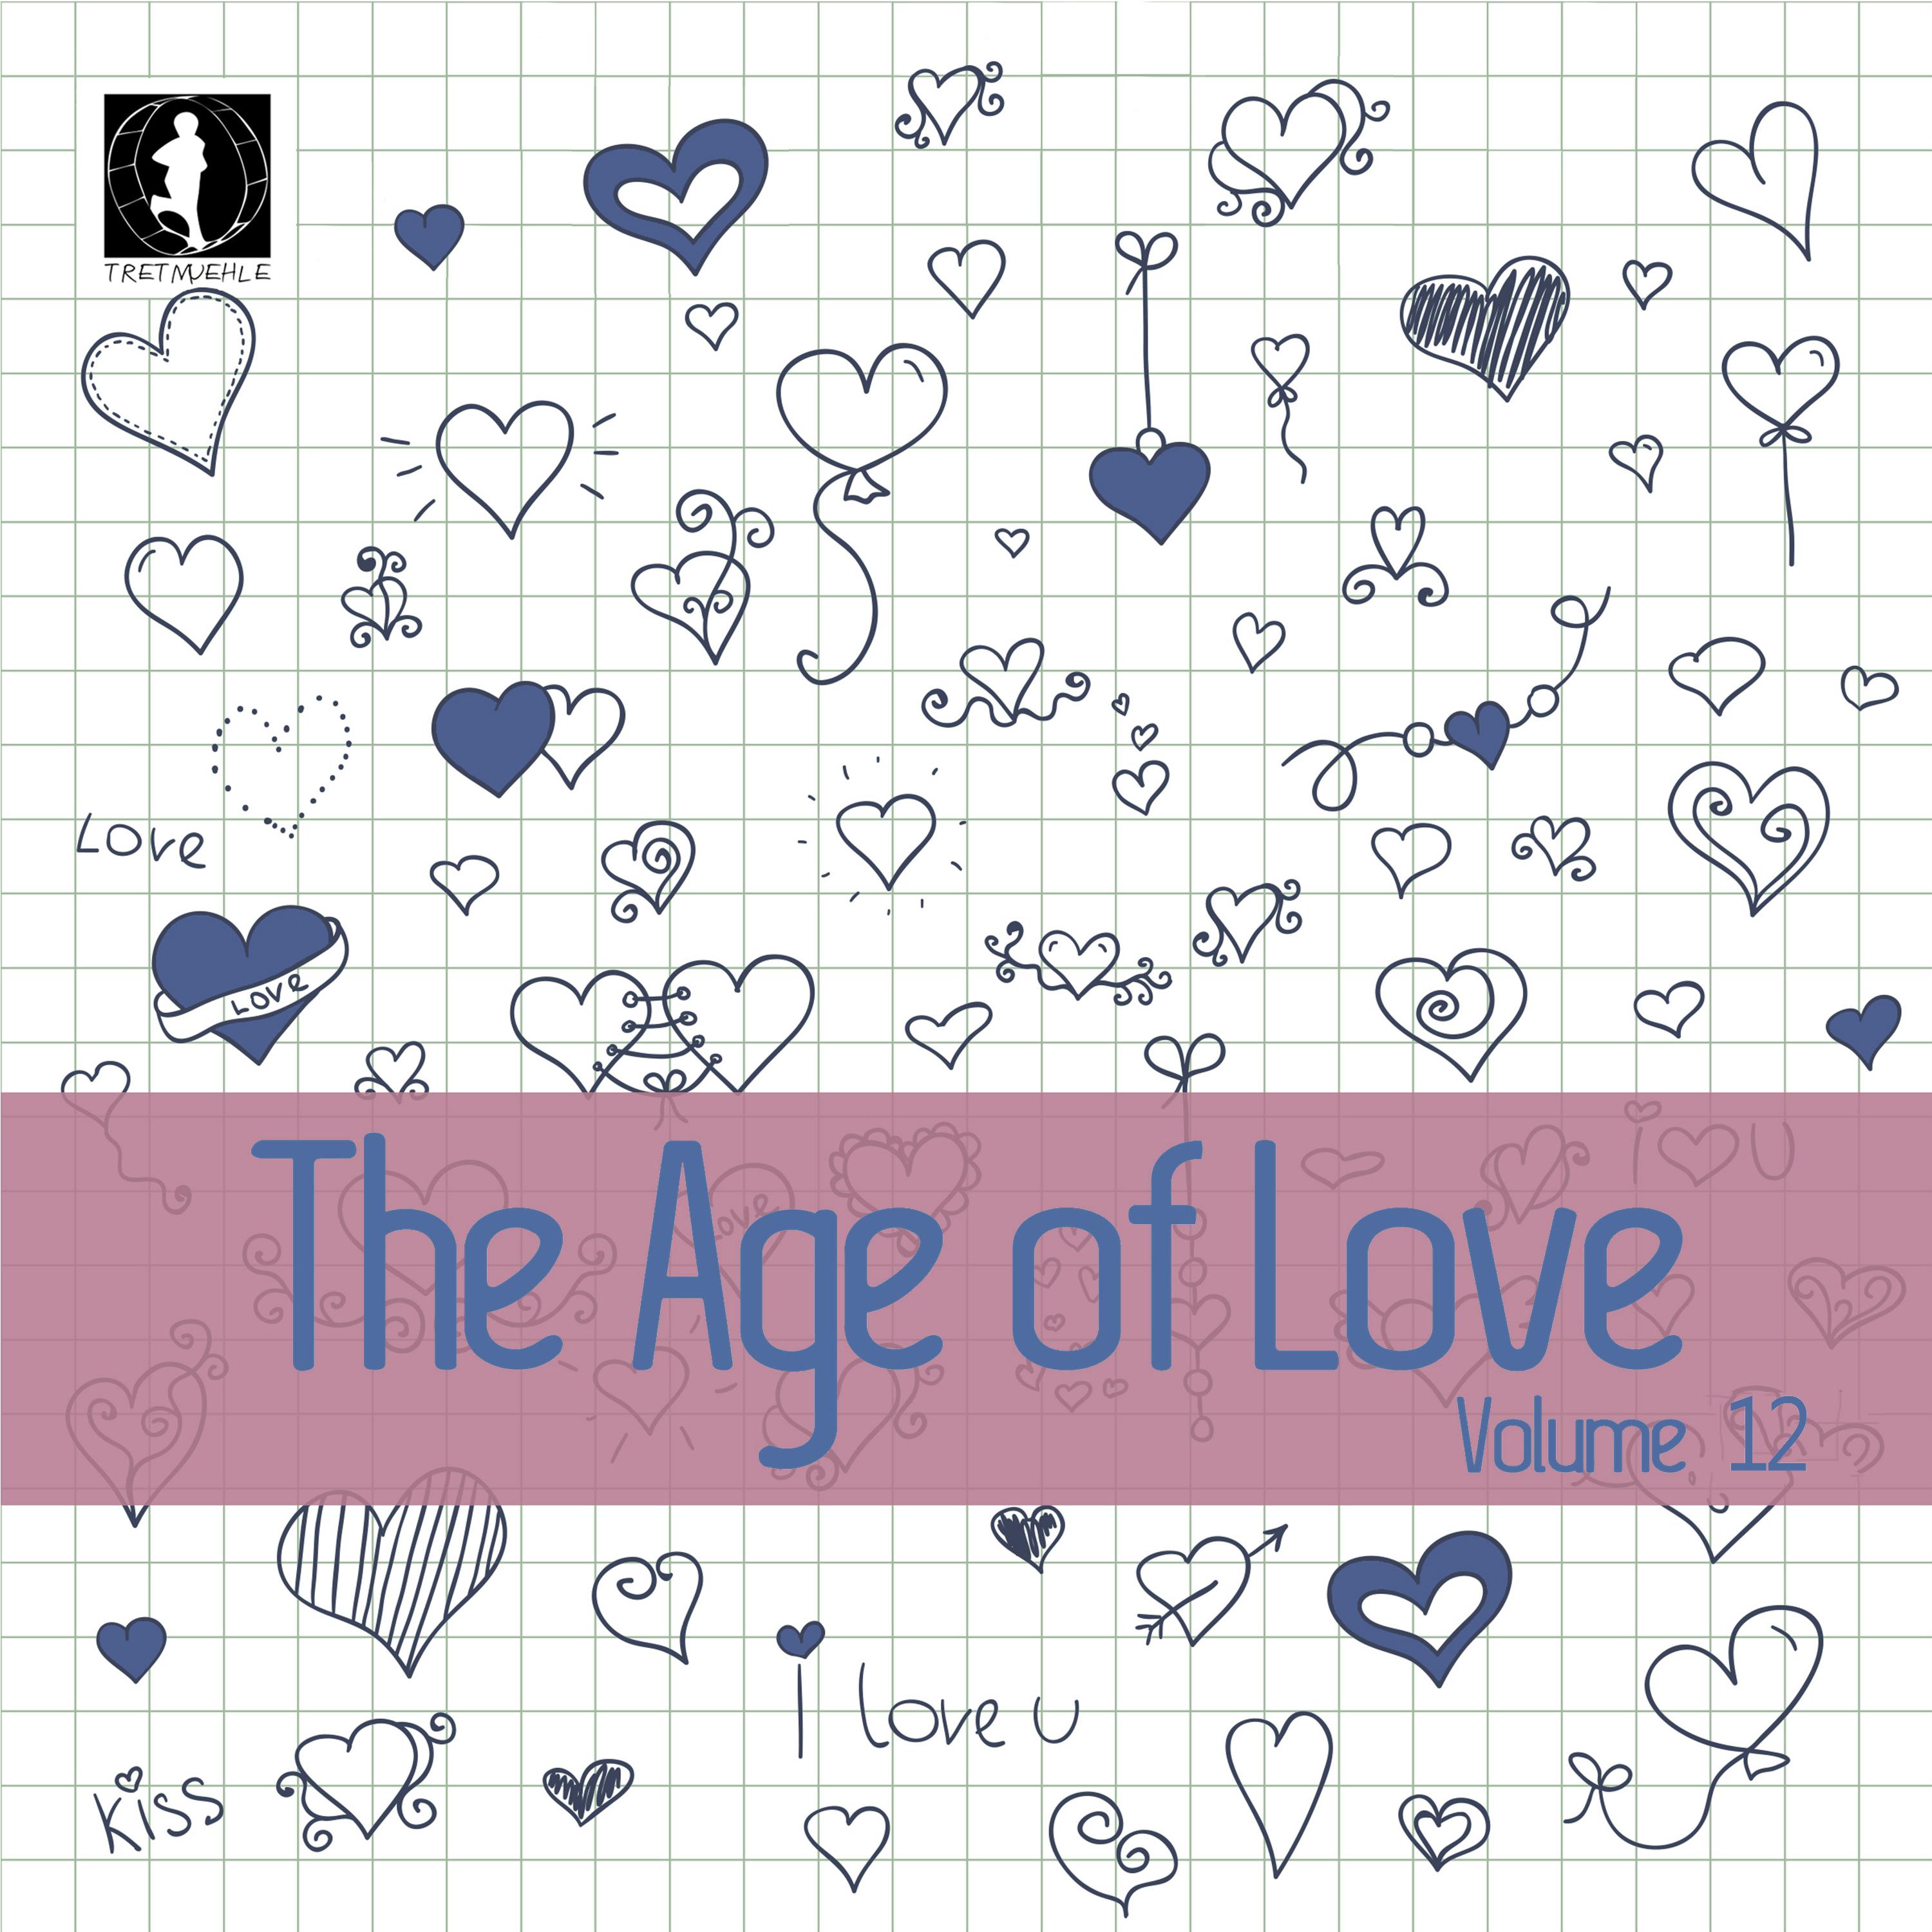 The Age of Love, Vol. 12